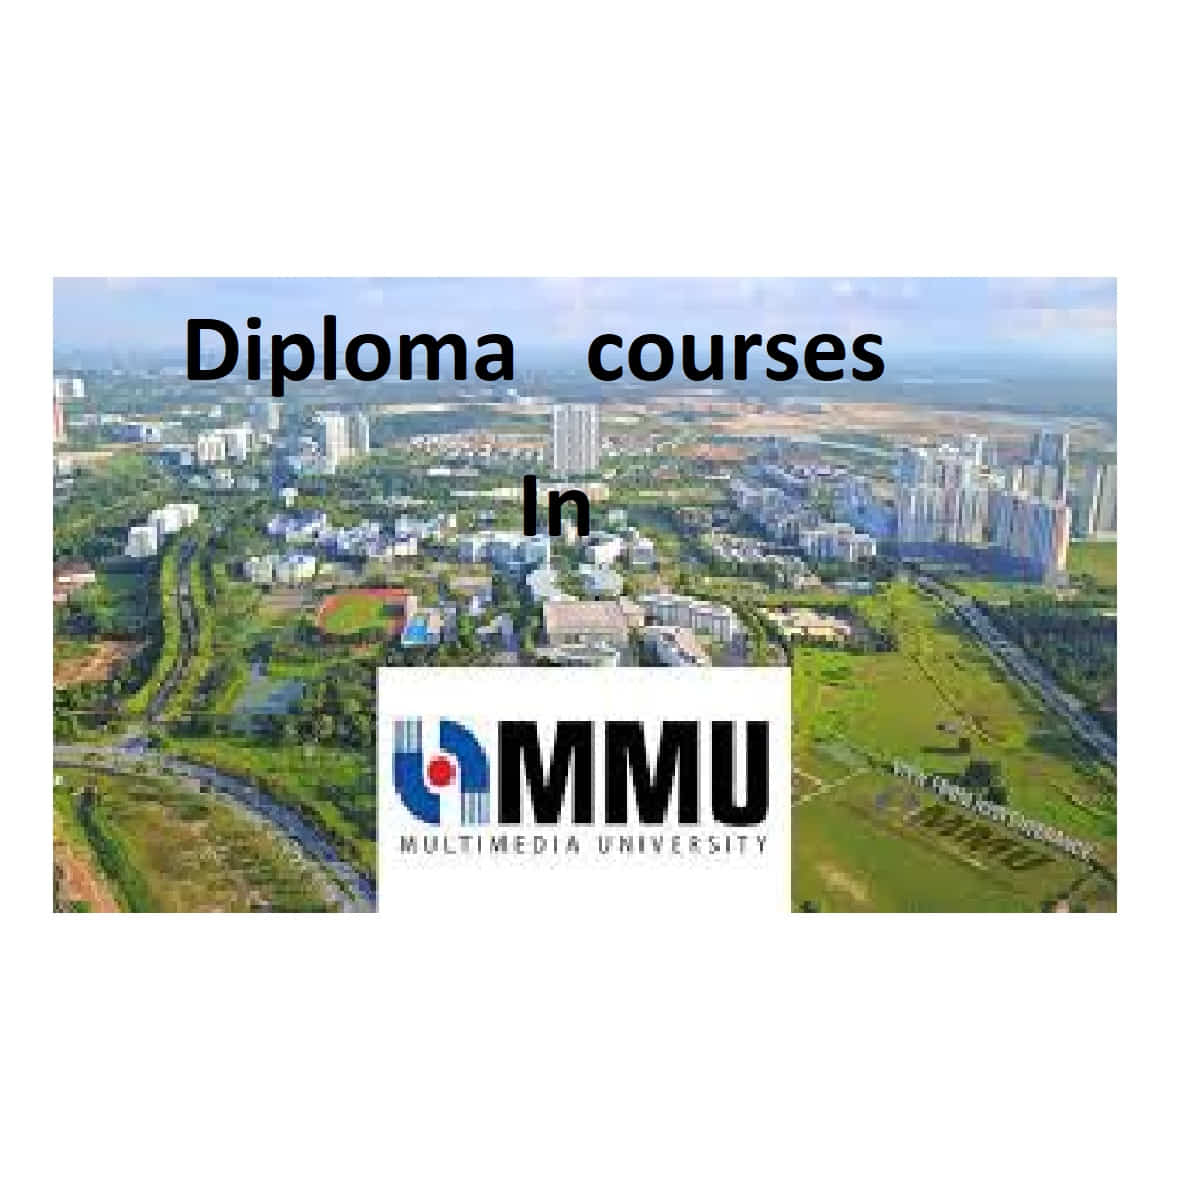 Diploma courses in multimedia university